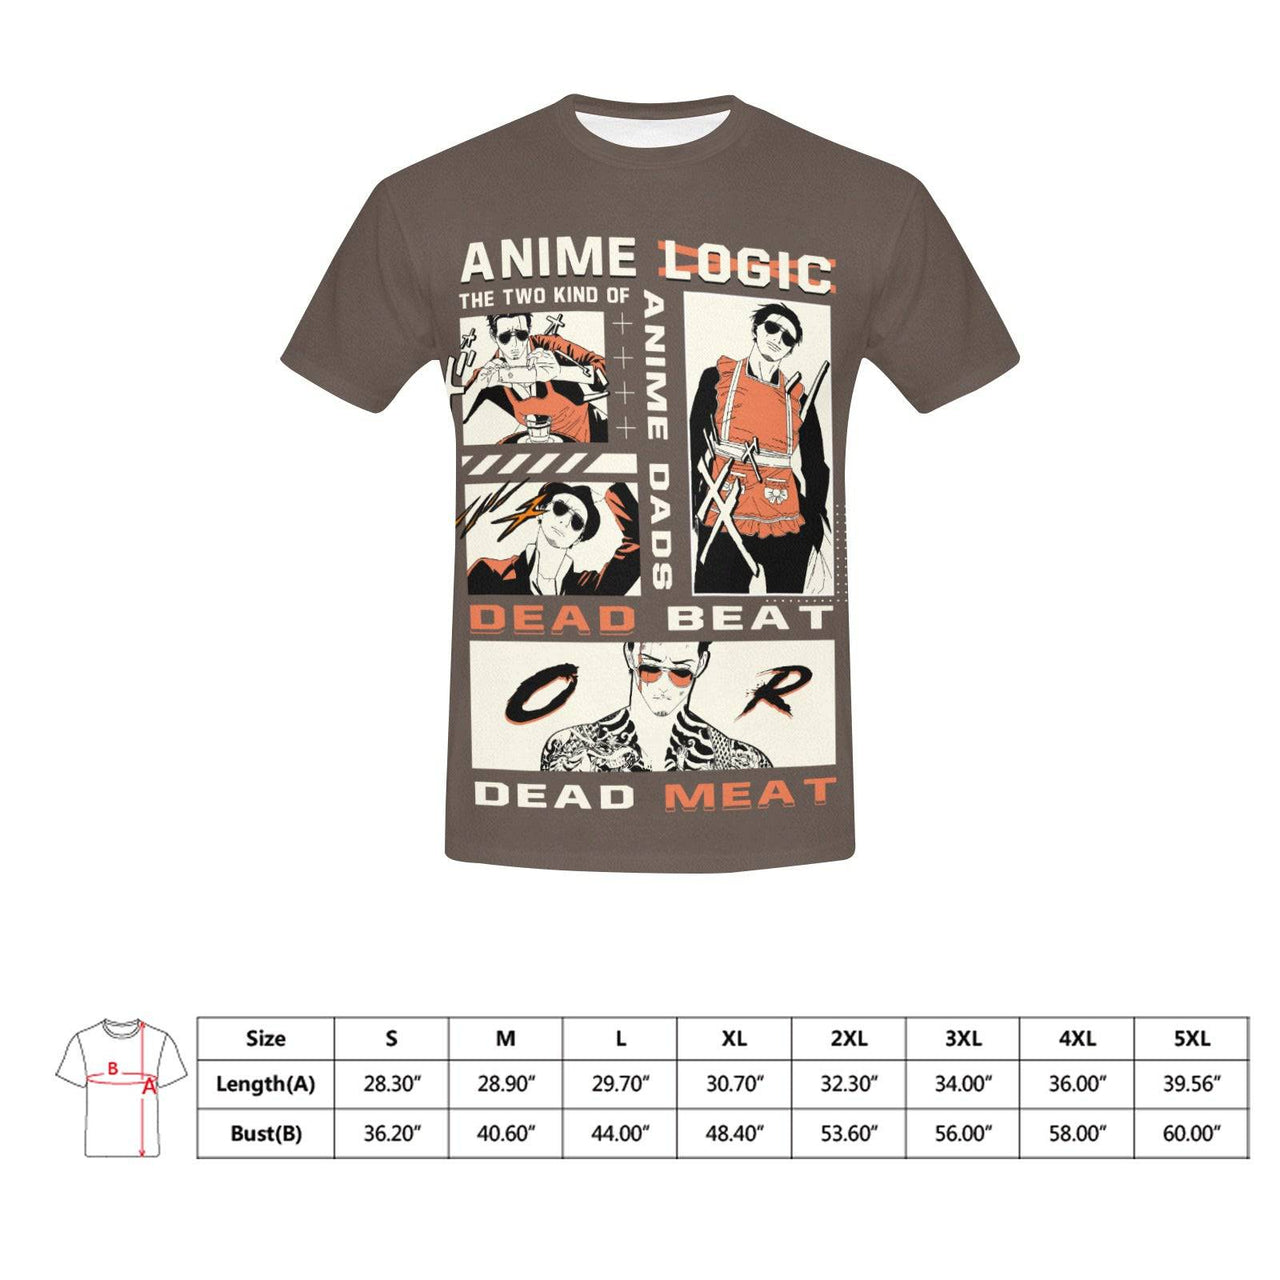 Anime Logic 2 Kinds of Dads Graphic Tee Shirt - FIHEROE.